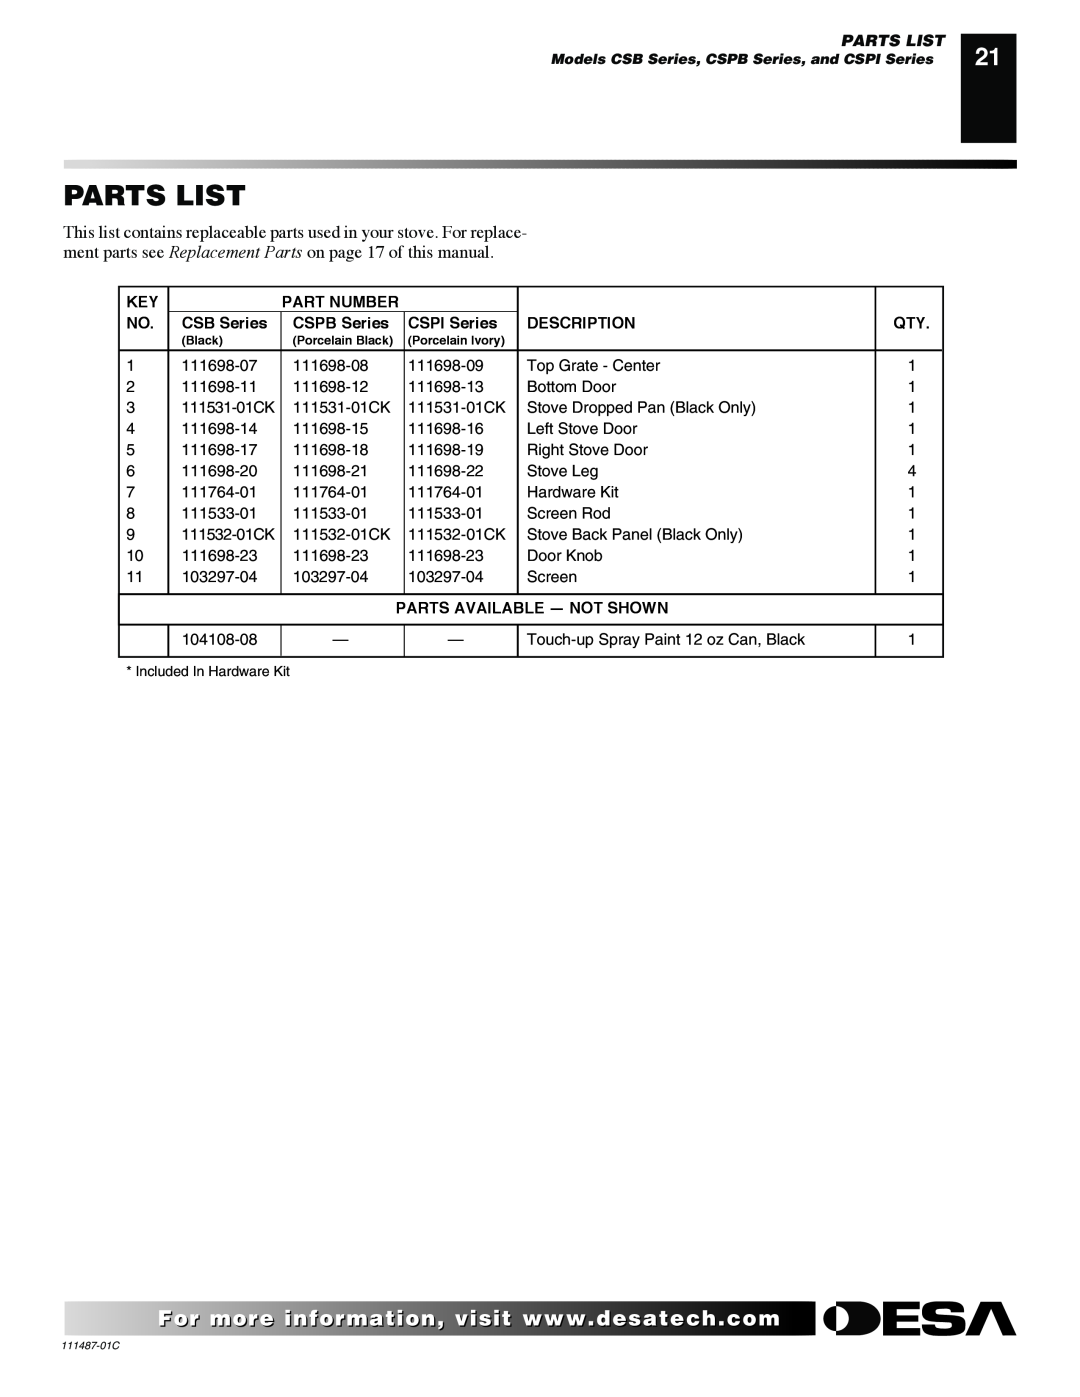 Desa CSPBPT CSPINT Parts List, Part Number, CSB Series, CSPB Series, CSPI Series, Description, Parts Available - Not Shown 